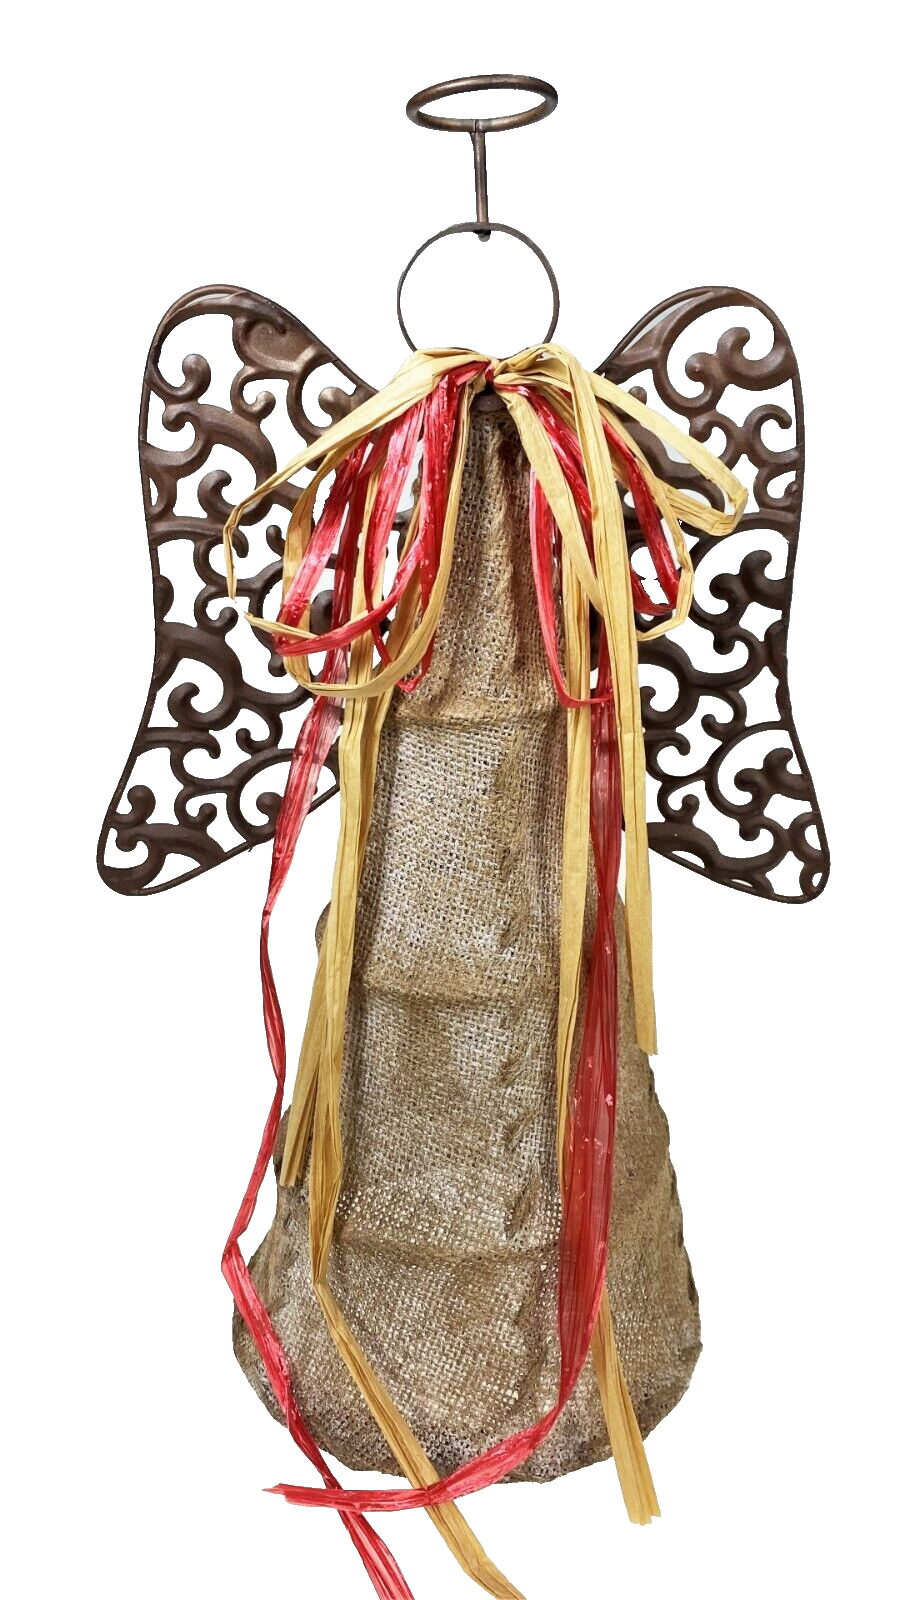 16” Angel Figurine Centerpiece Tree Topper Holiday Rustic Farmhouse Metal Burlap